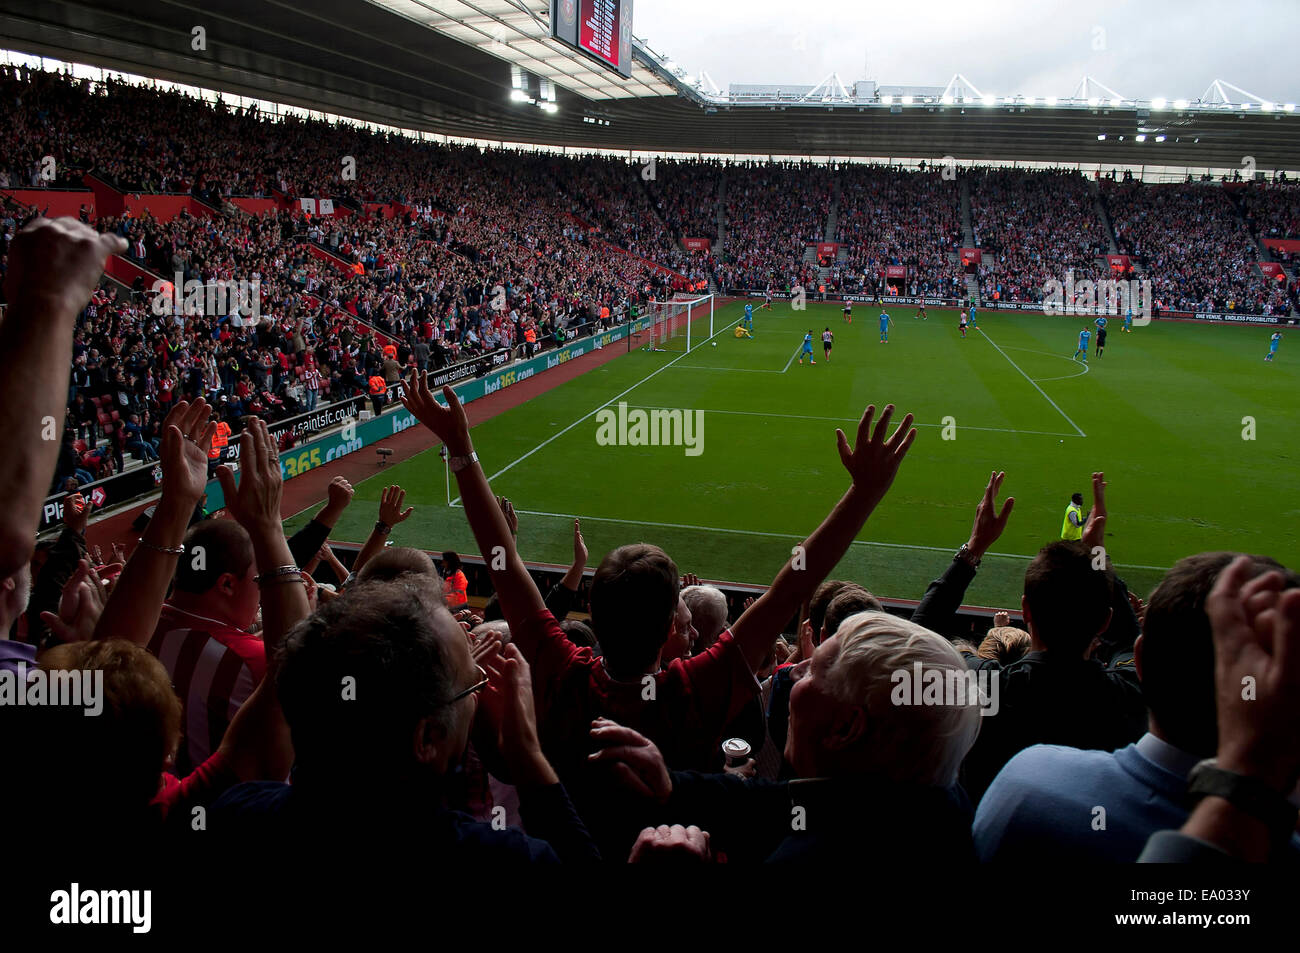 Southampton beat Sunderland 8-0 at St. Mary's Stadium in the Premier League, England, United Kingdom, 18 October, 2014. Stock Photo